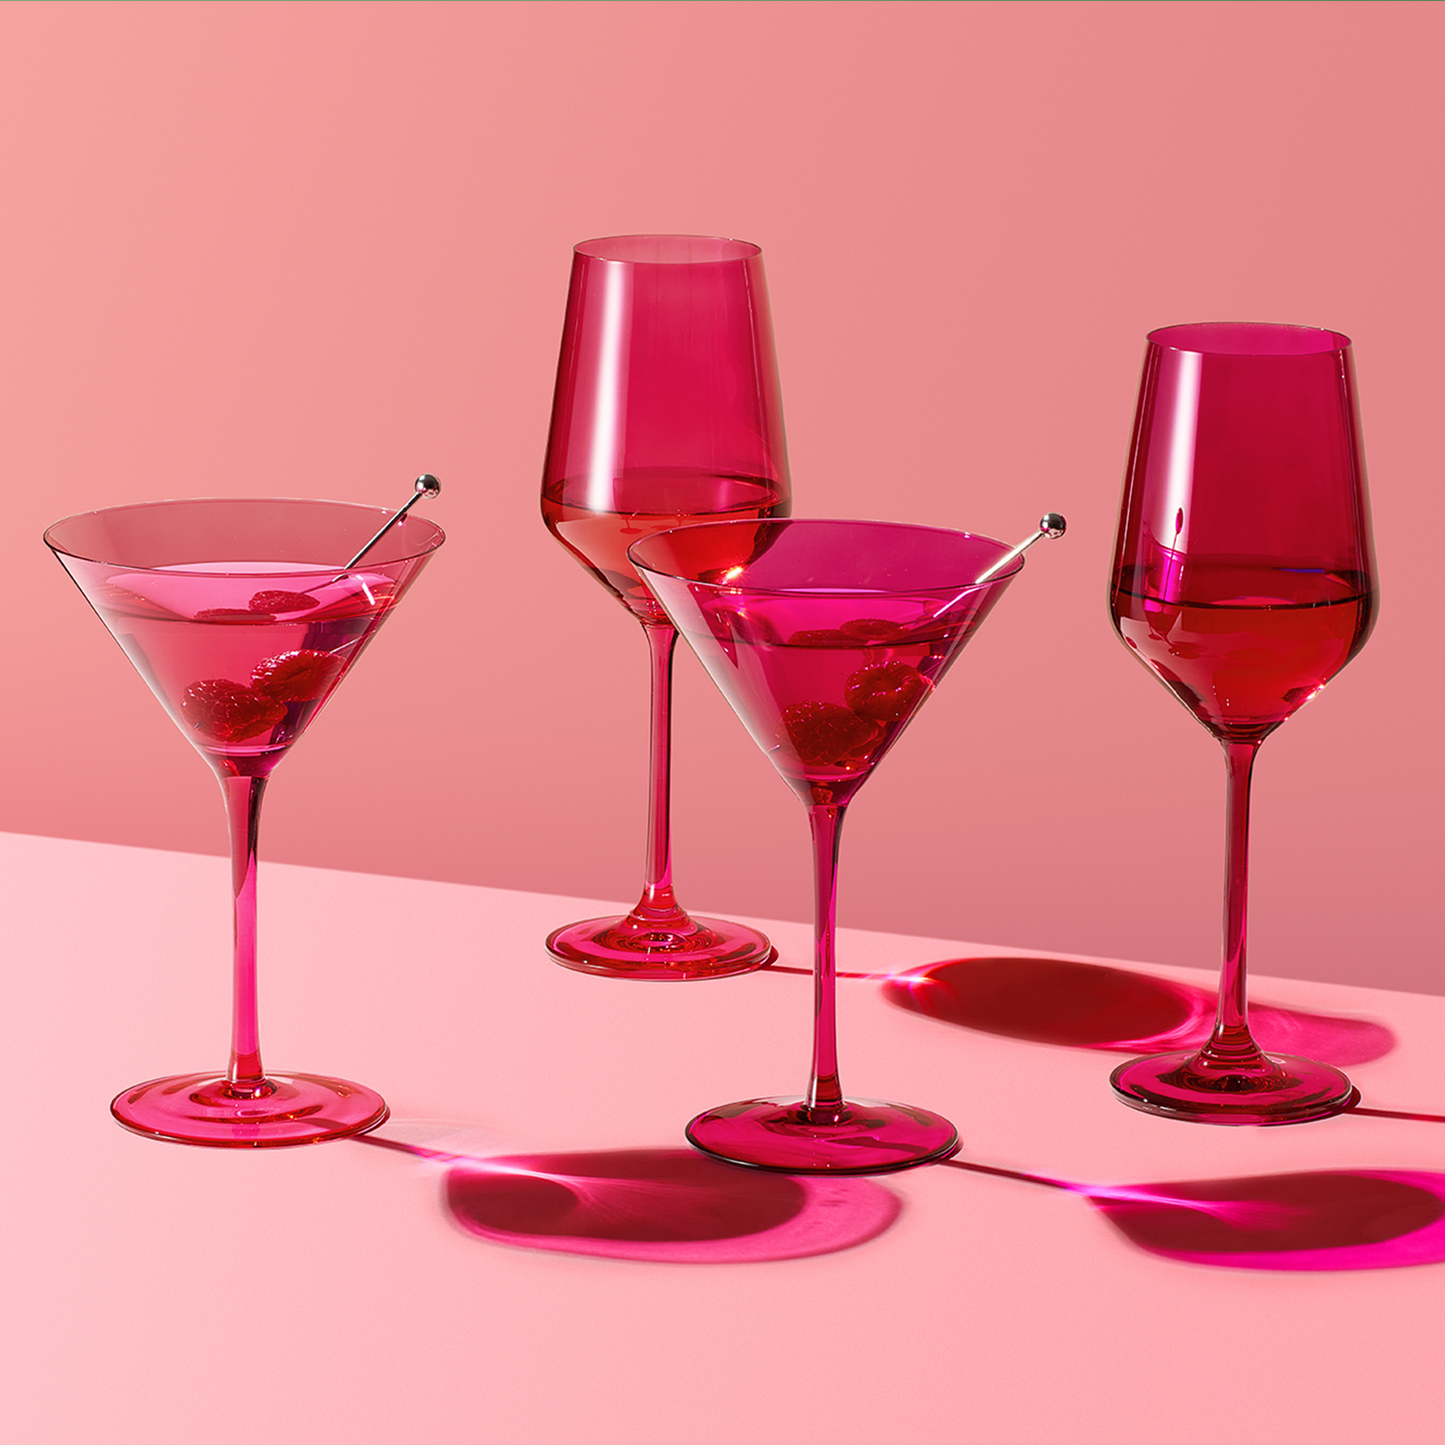 Chica Martini Cocktail Glassware, Set of 2